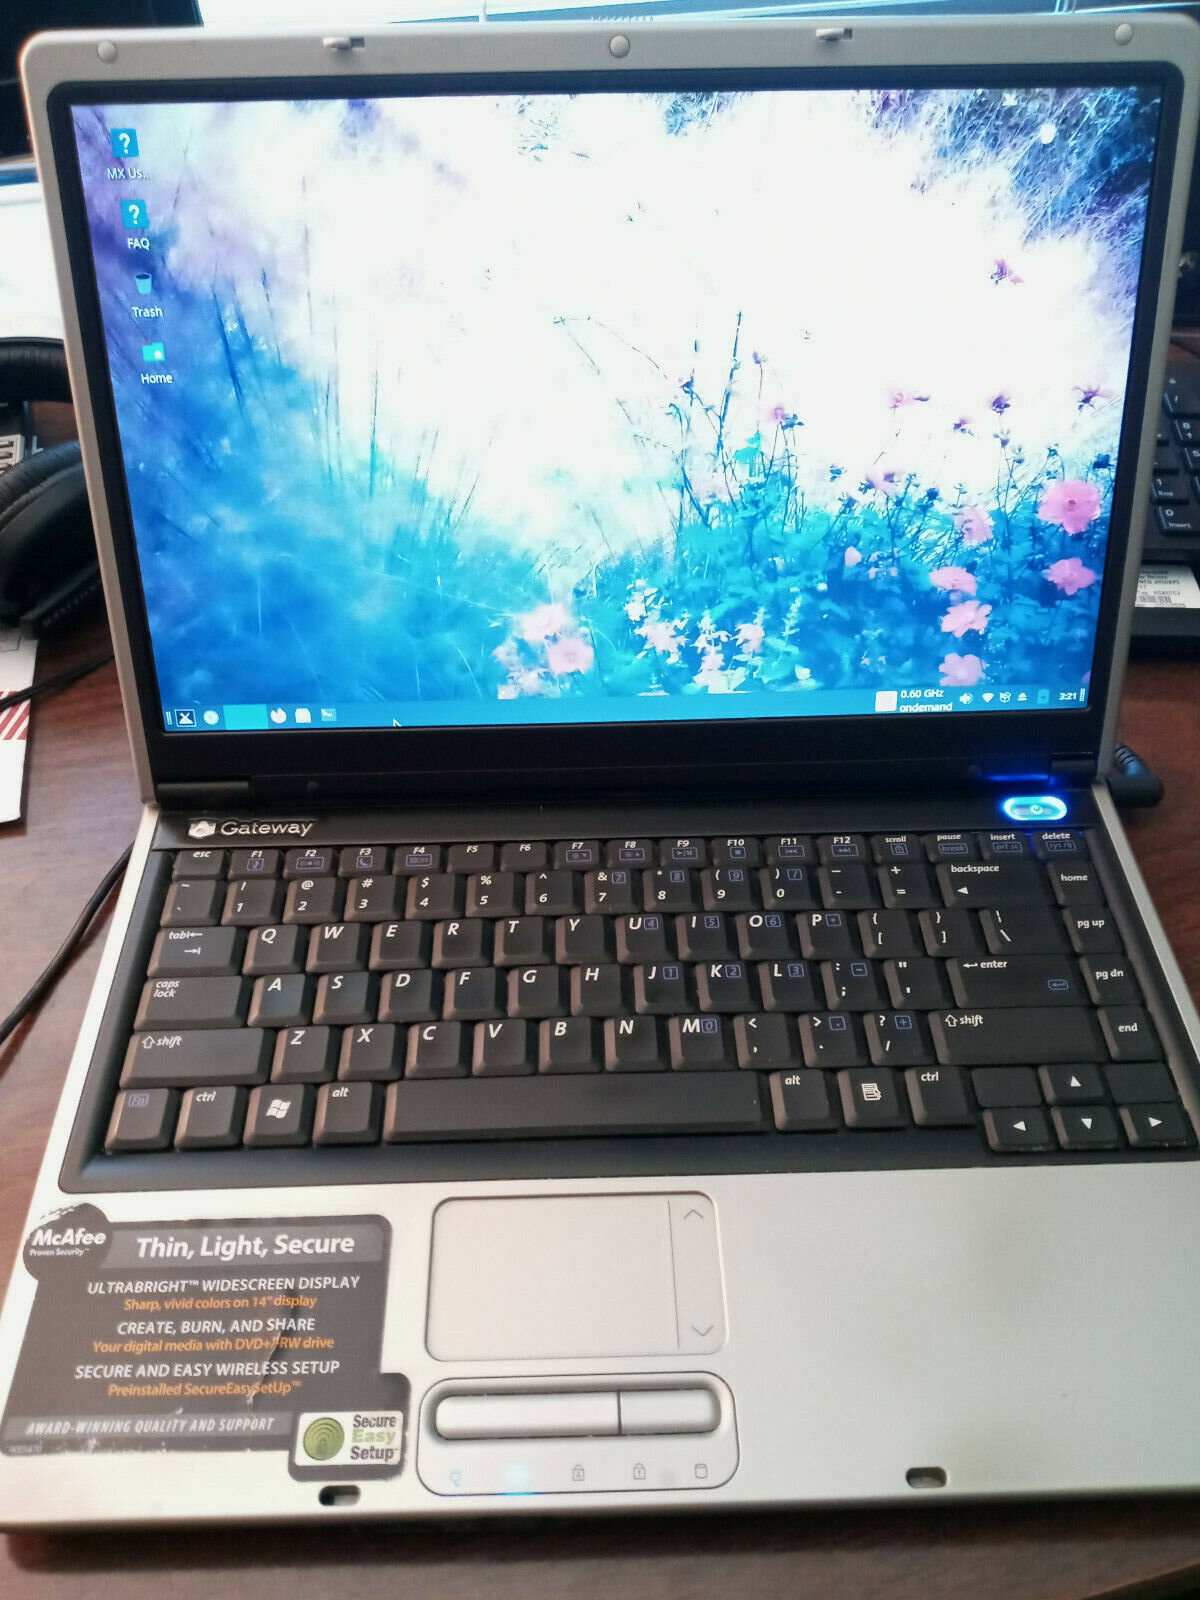 Gateway MX-3228 W323-UL1 Laptop - Vintage - one owner - Works